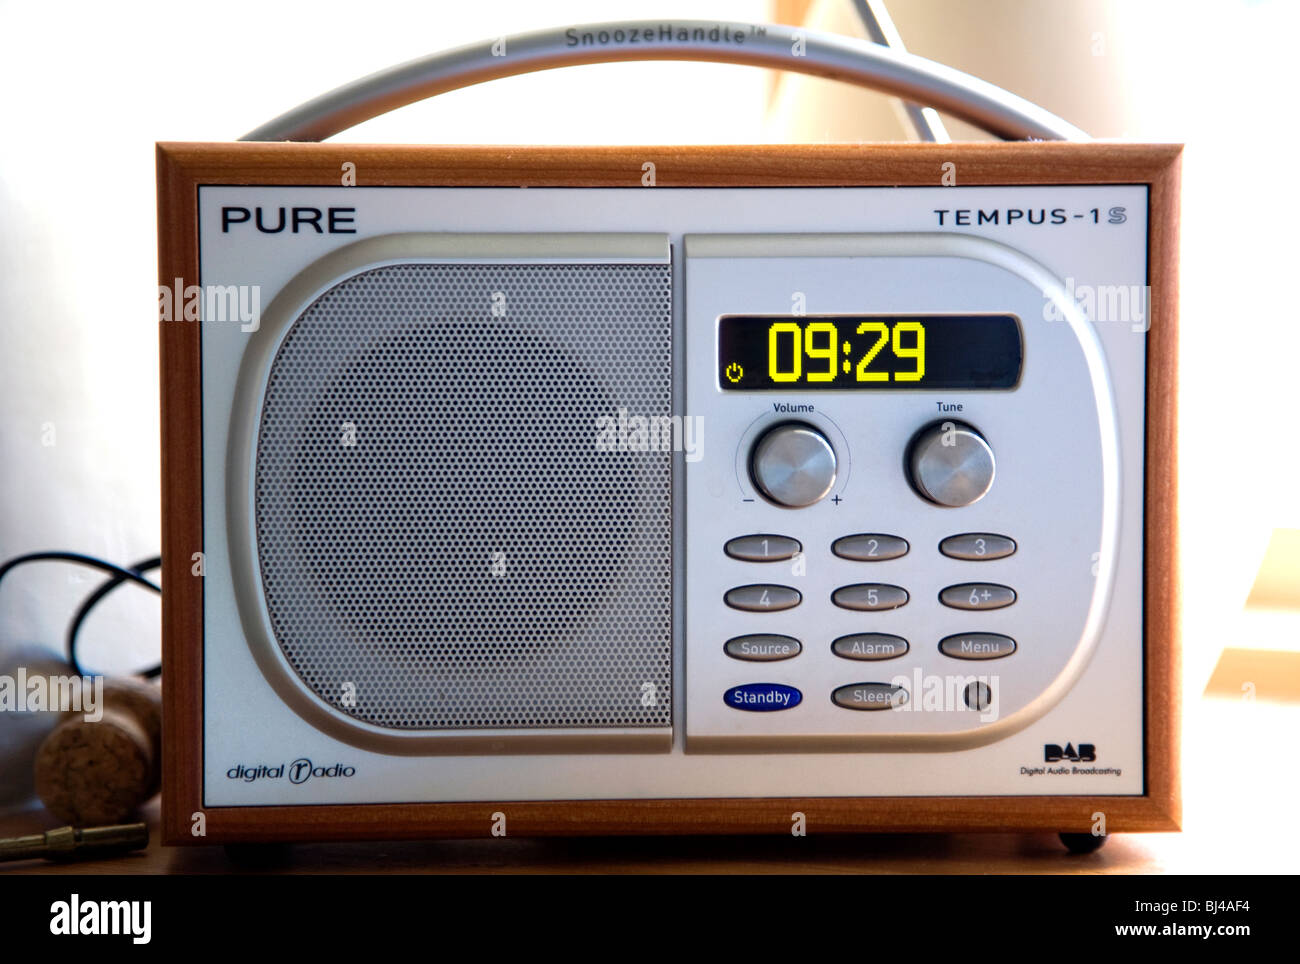 Pure DAB digital radio Stock Photo - Alamy